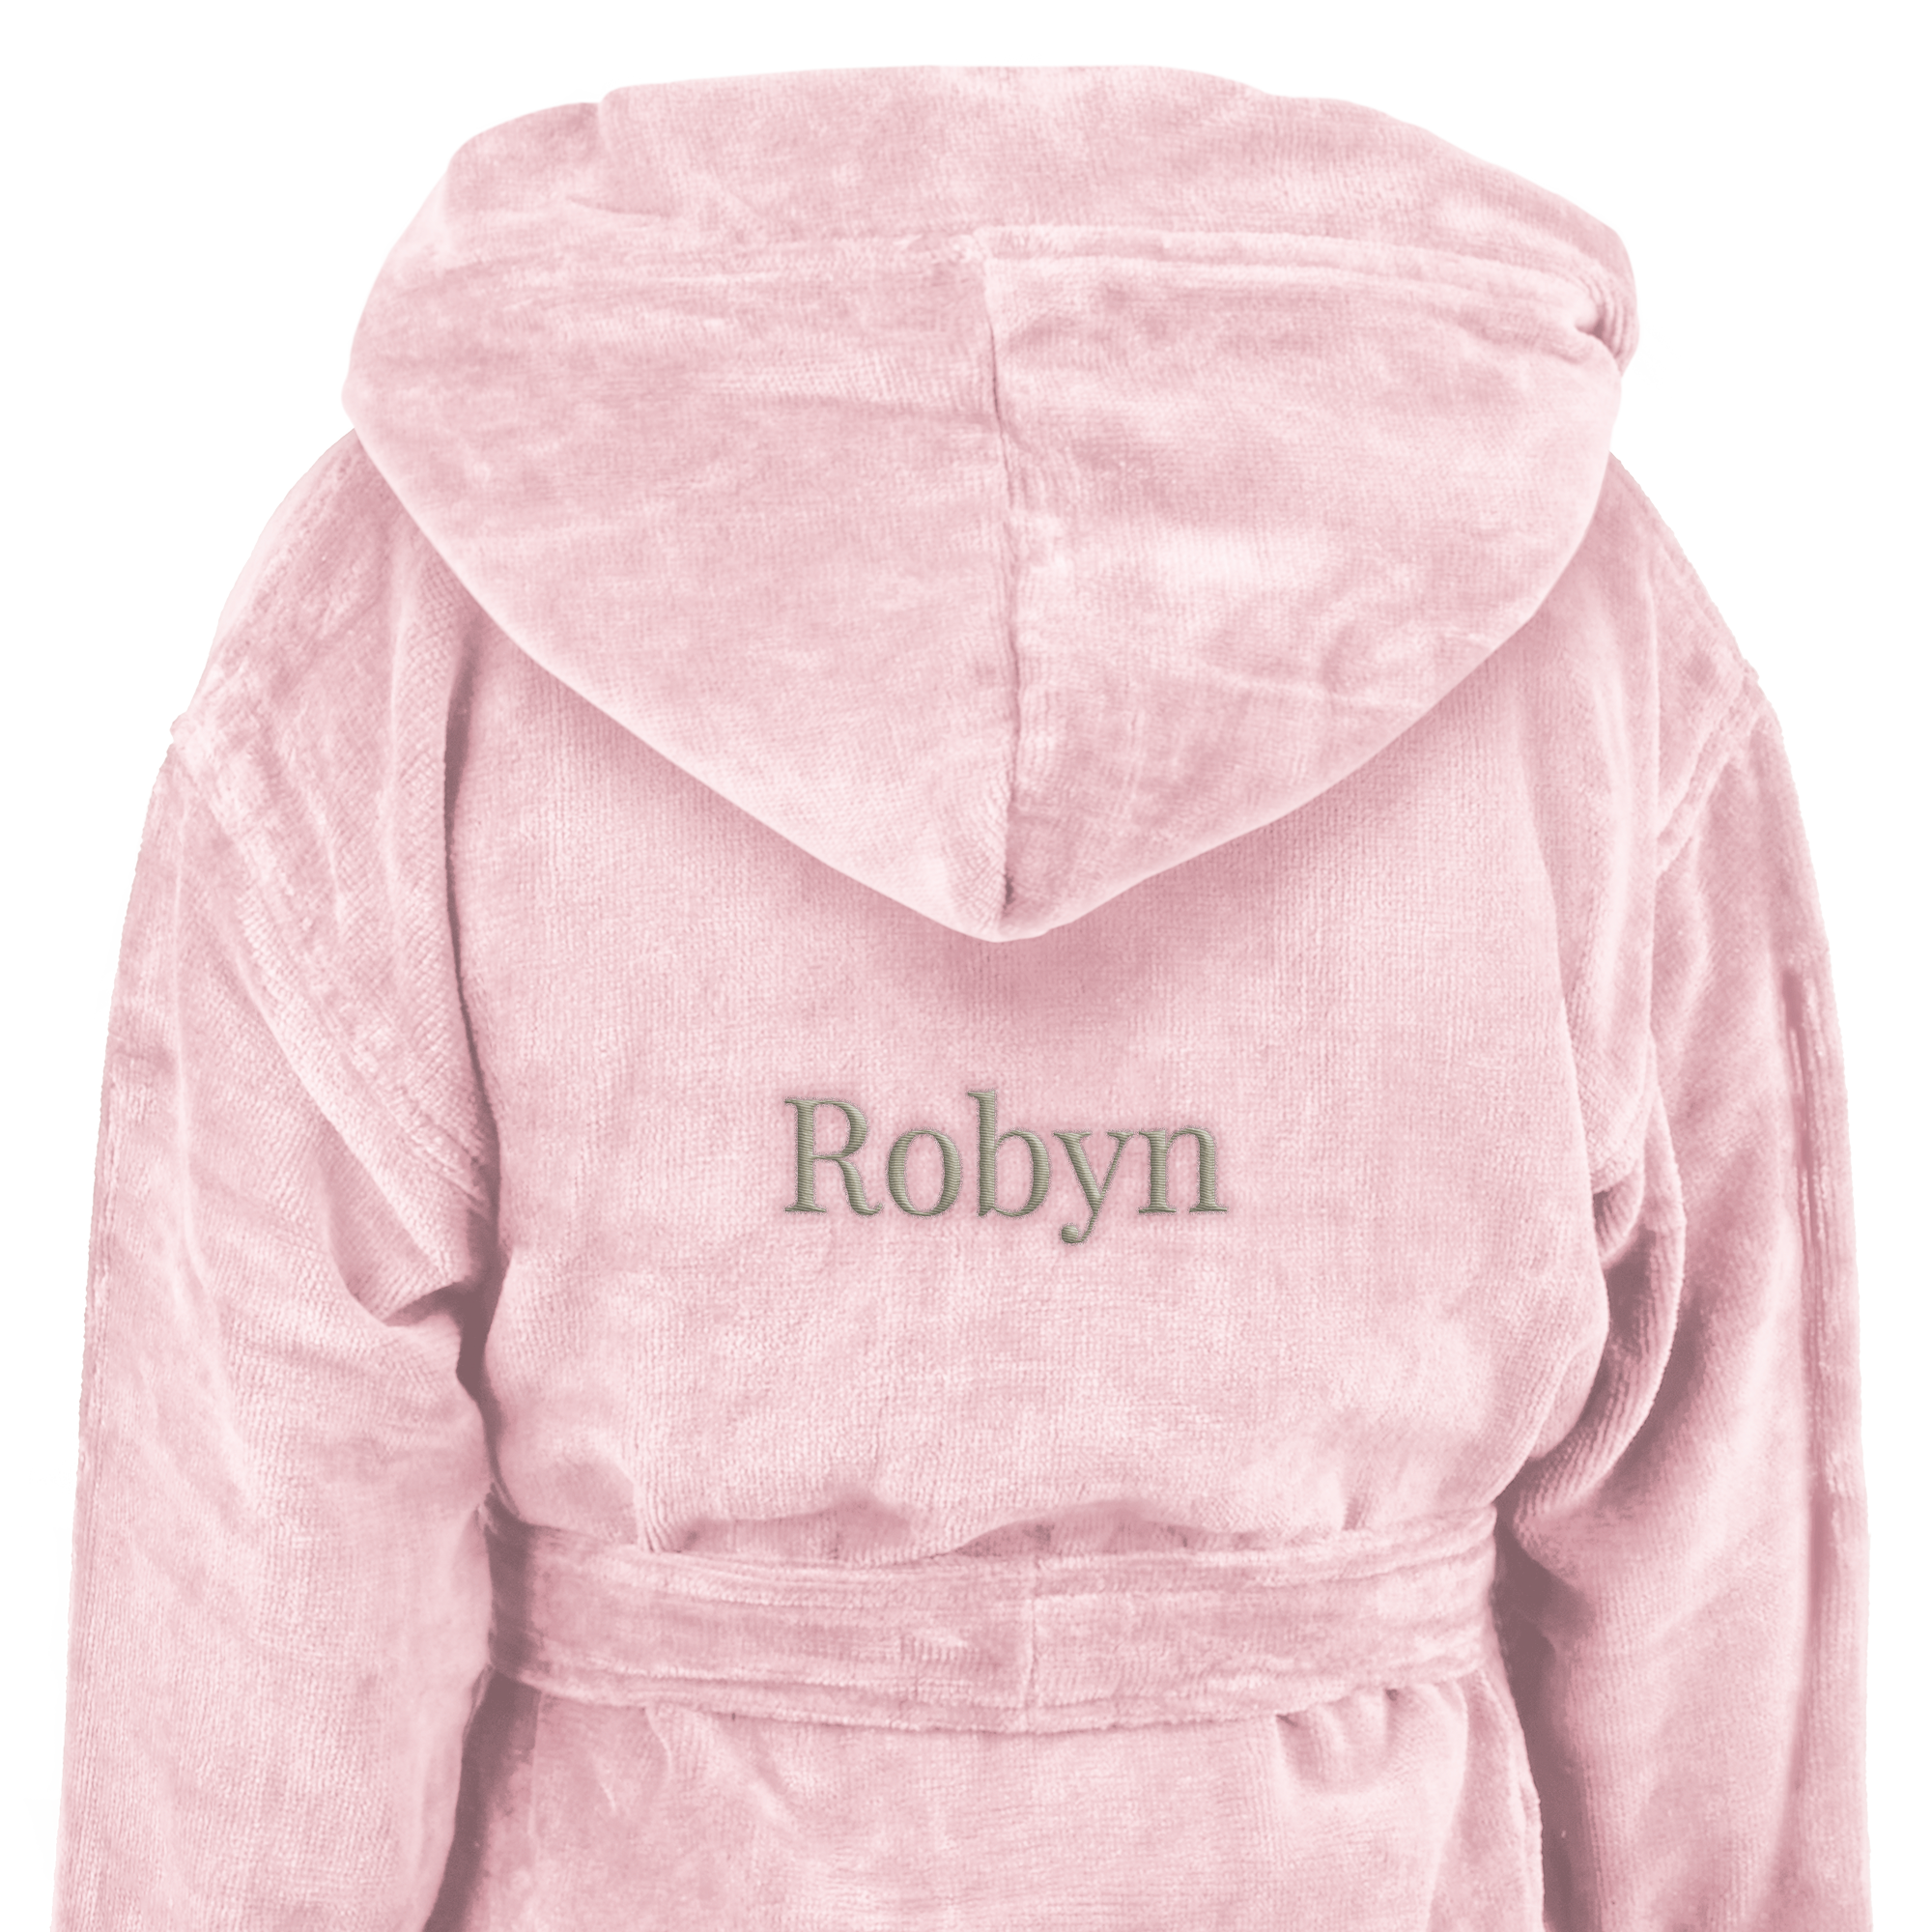 Personalised kids bathrobe - Pink - 6-8 yrs